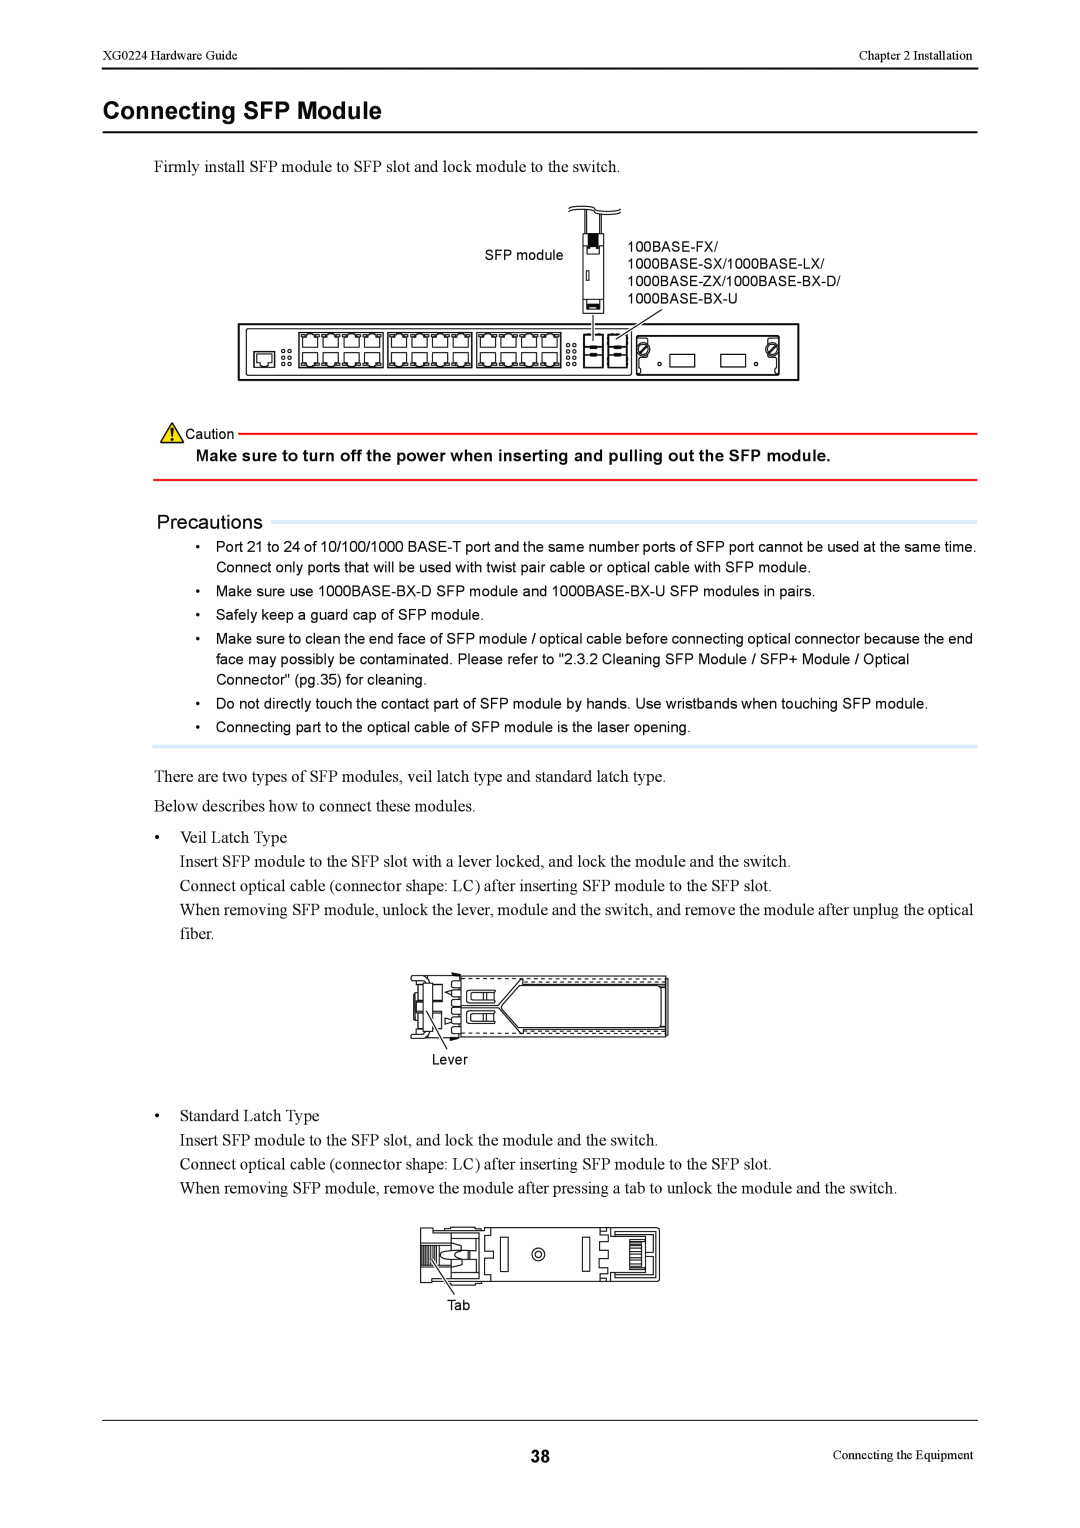 Fujitsu XG0224 manual Connecting SFP Module 